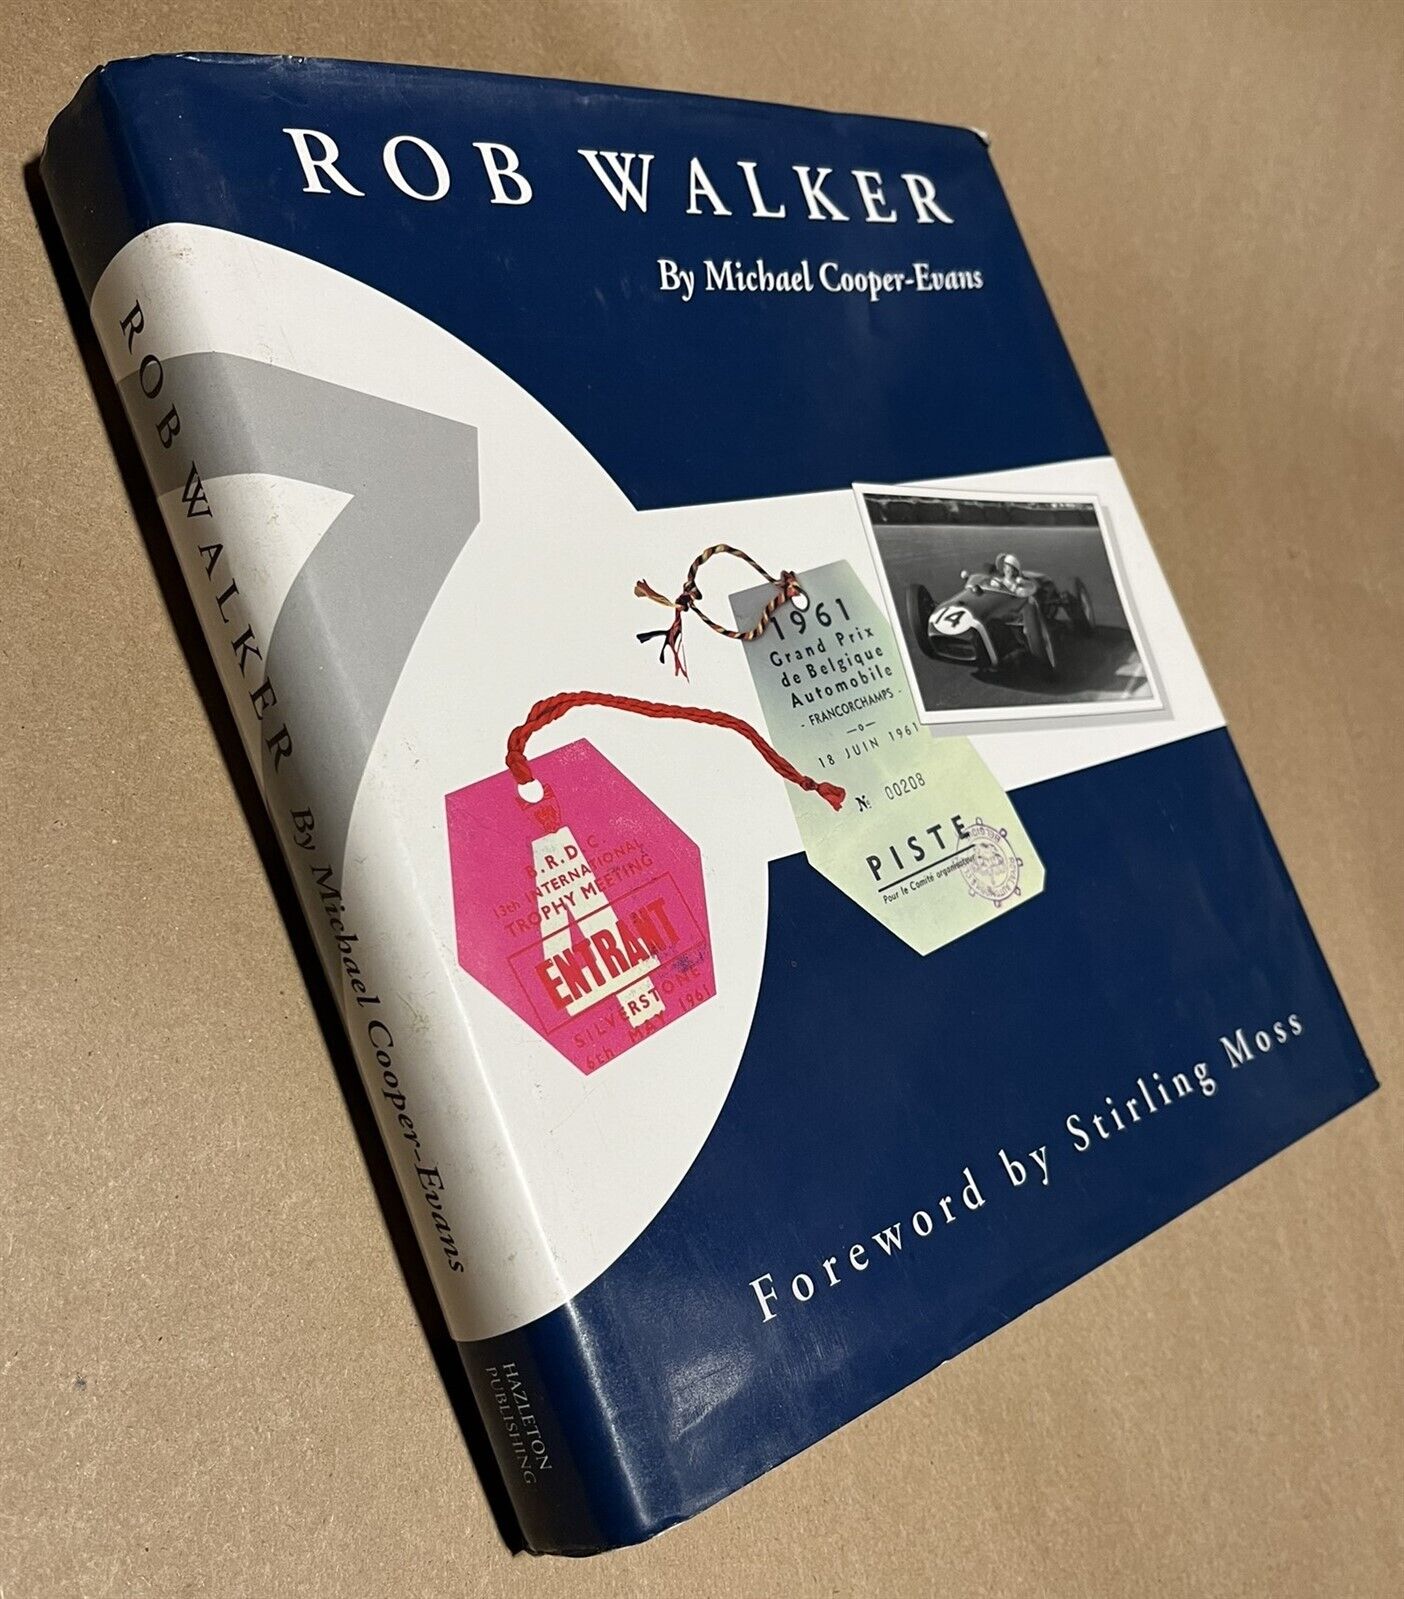 Book Walker Rob Walker by Michael Cooper-Evans 1993